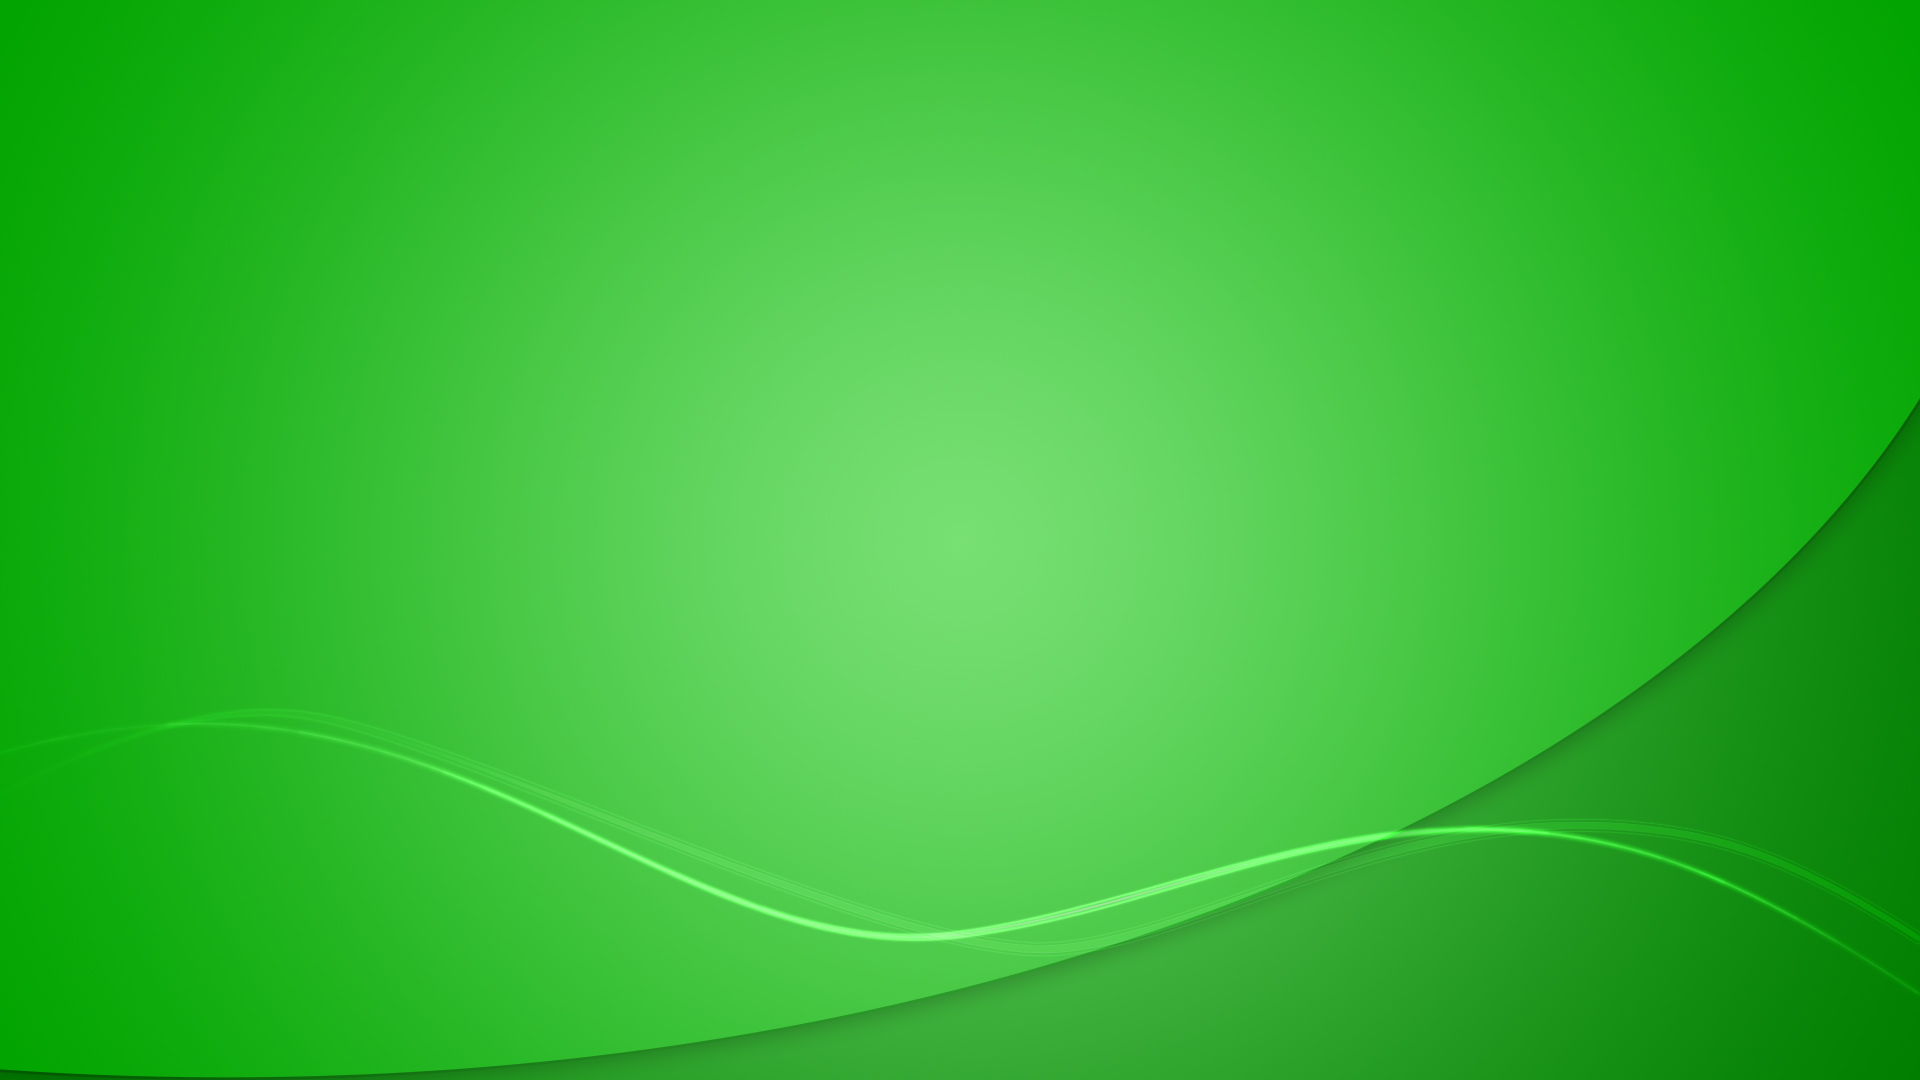 Standard Green Background by FWiDoug on DeviantArt